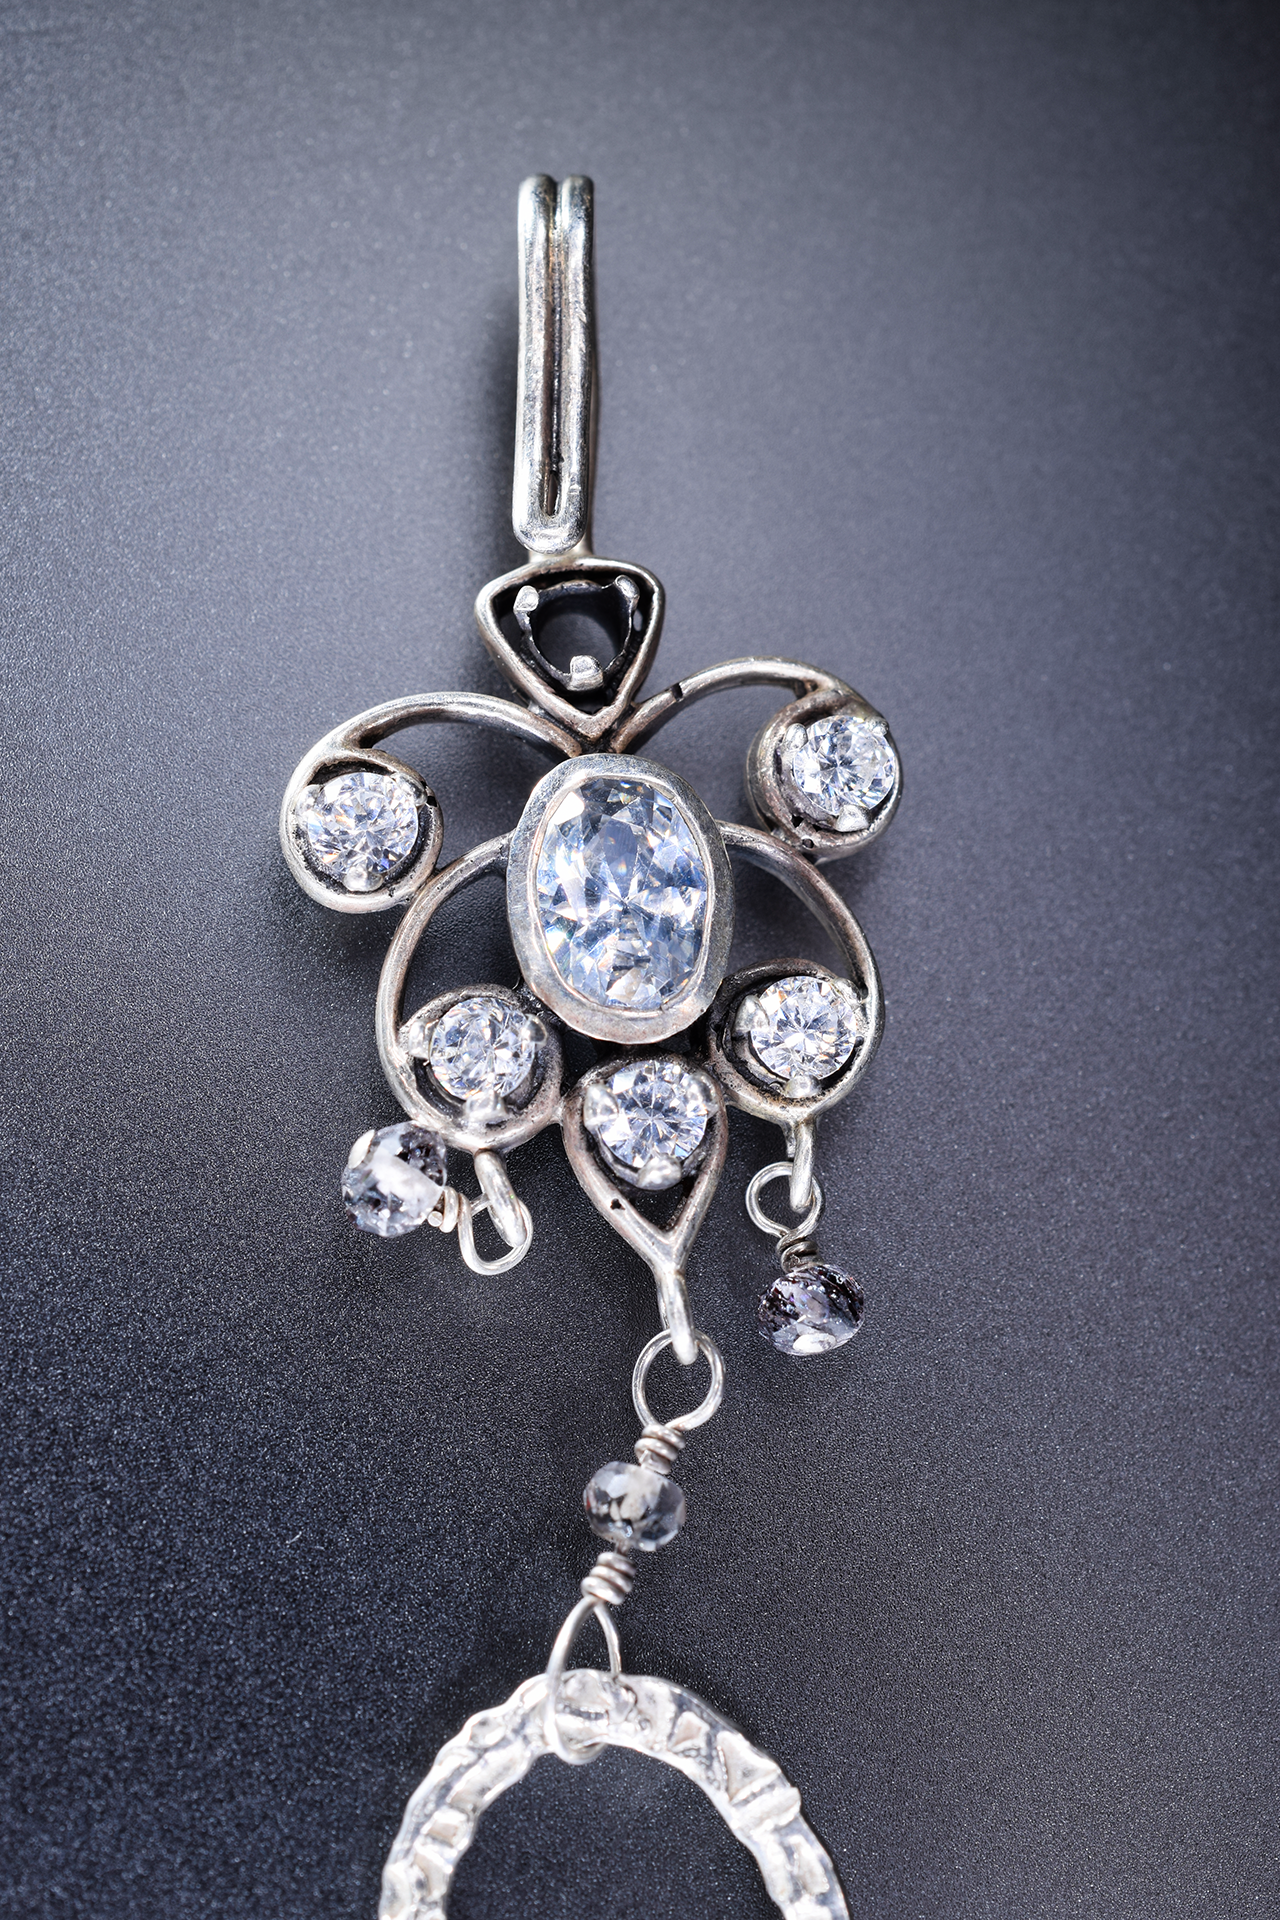 Druzy Pendant and Gemstone Necklace